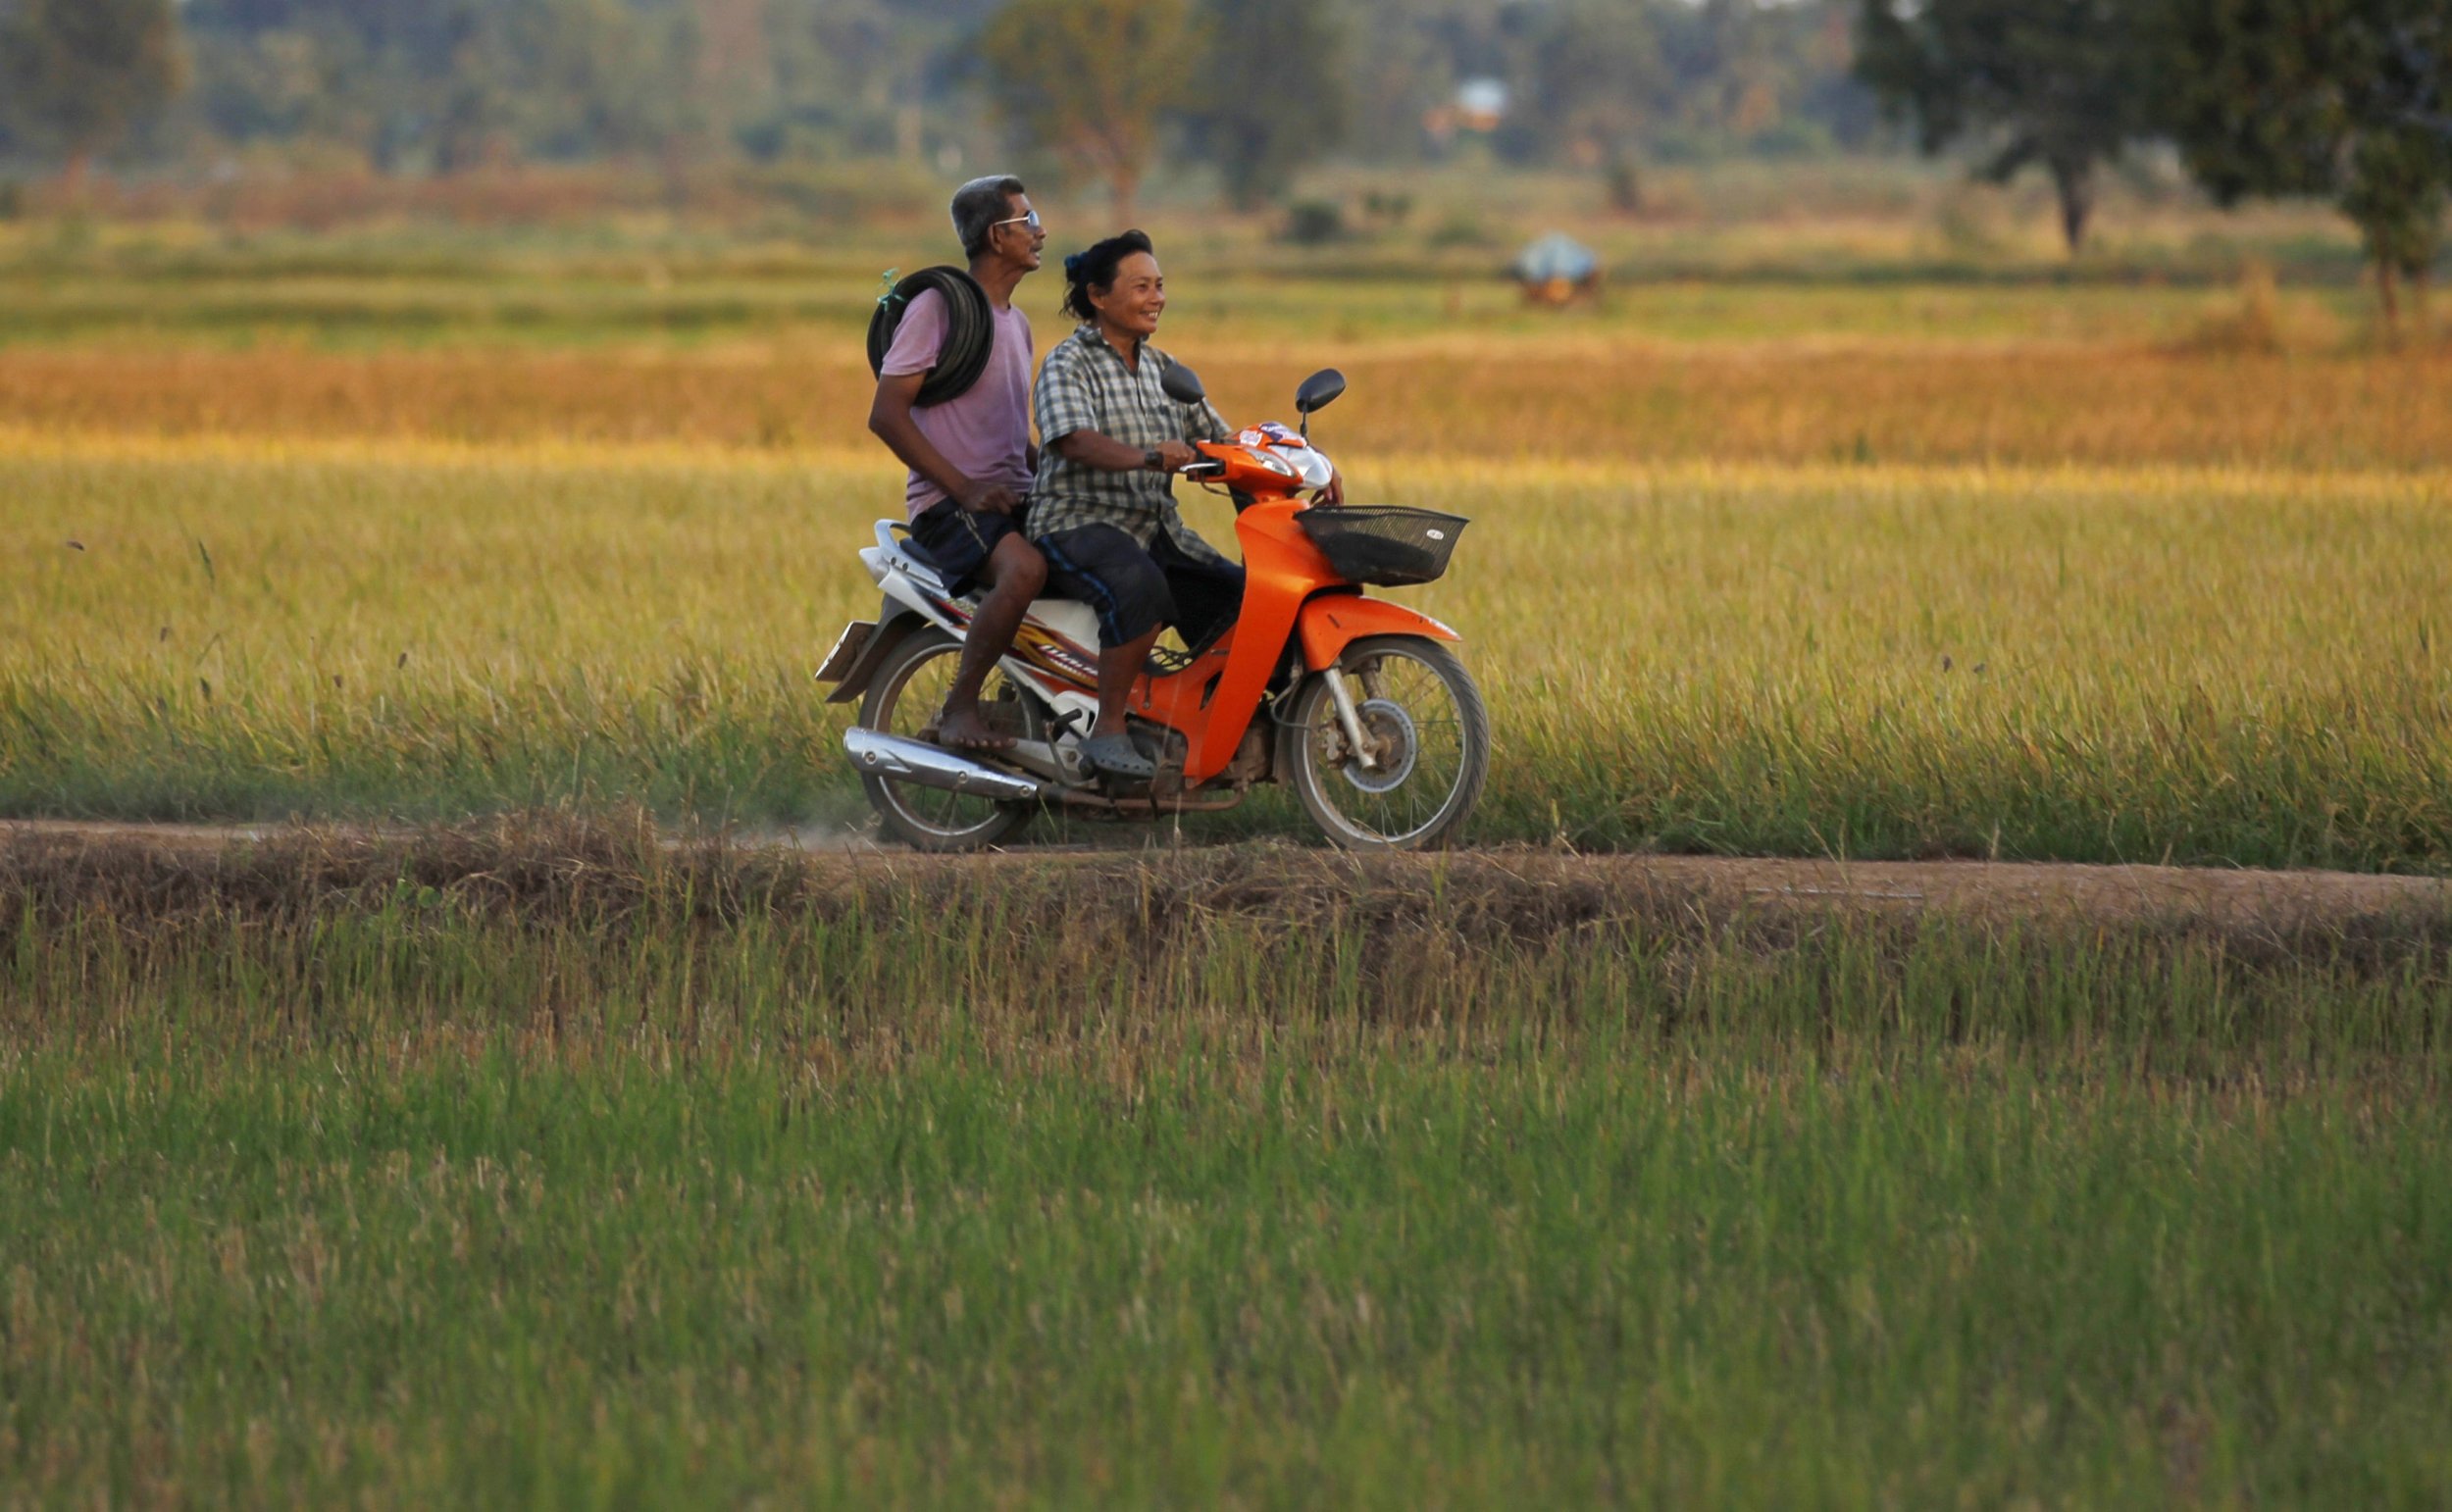 ubermoto uber motorbike motorcycle thailand bangkok